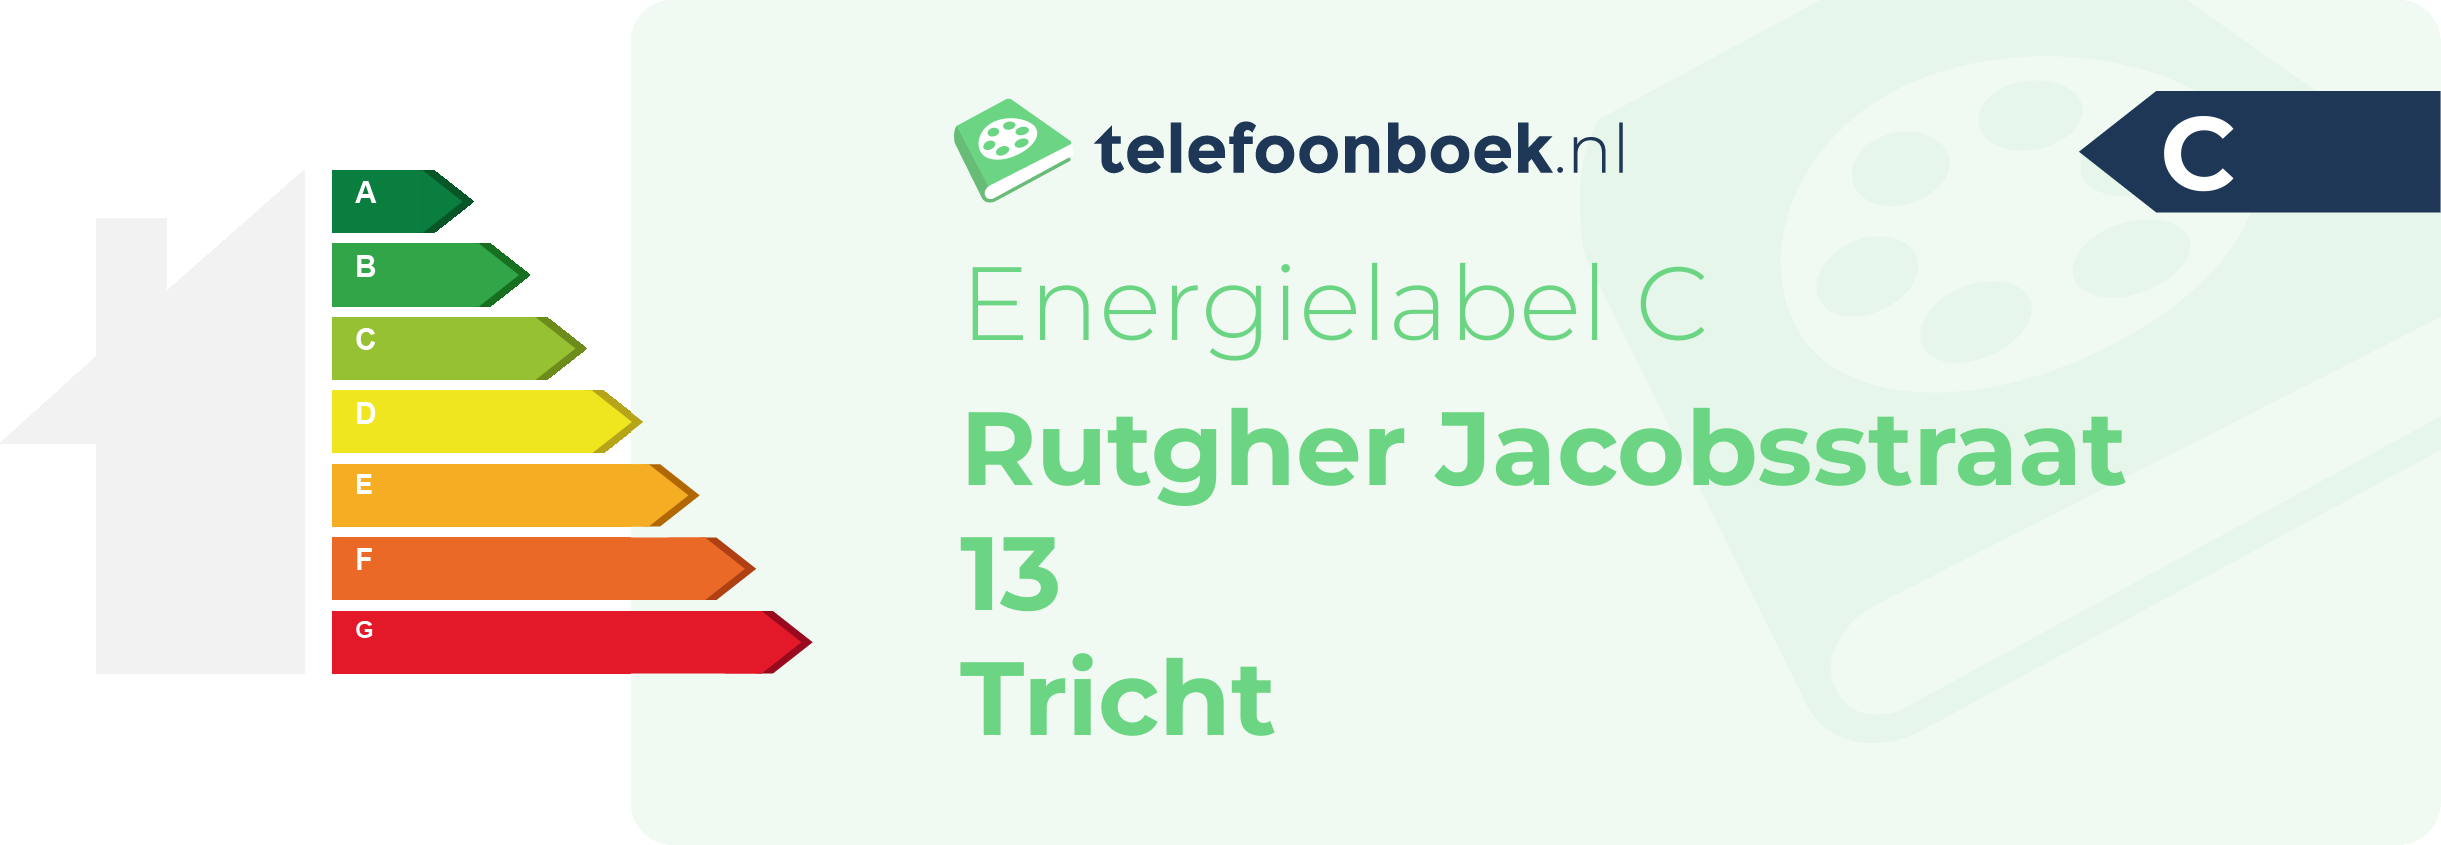 Energielabel Rutgher Jacobsstraat 13 Tricht